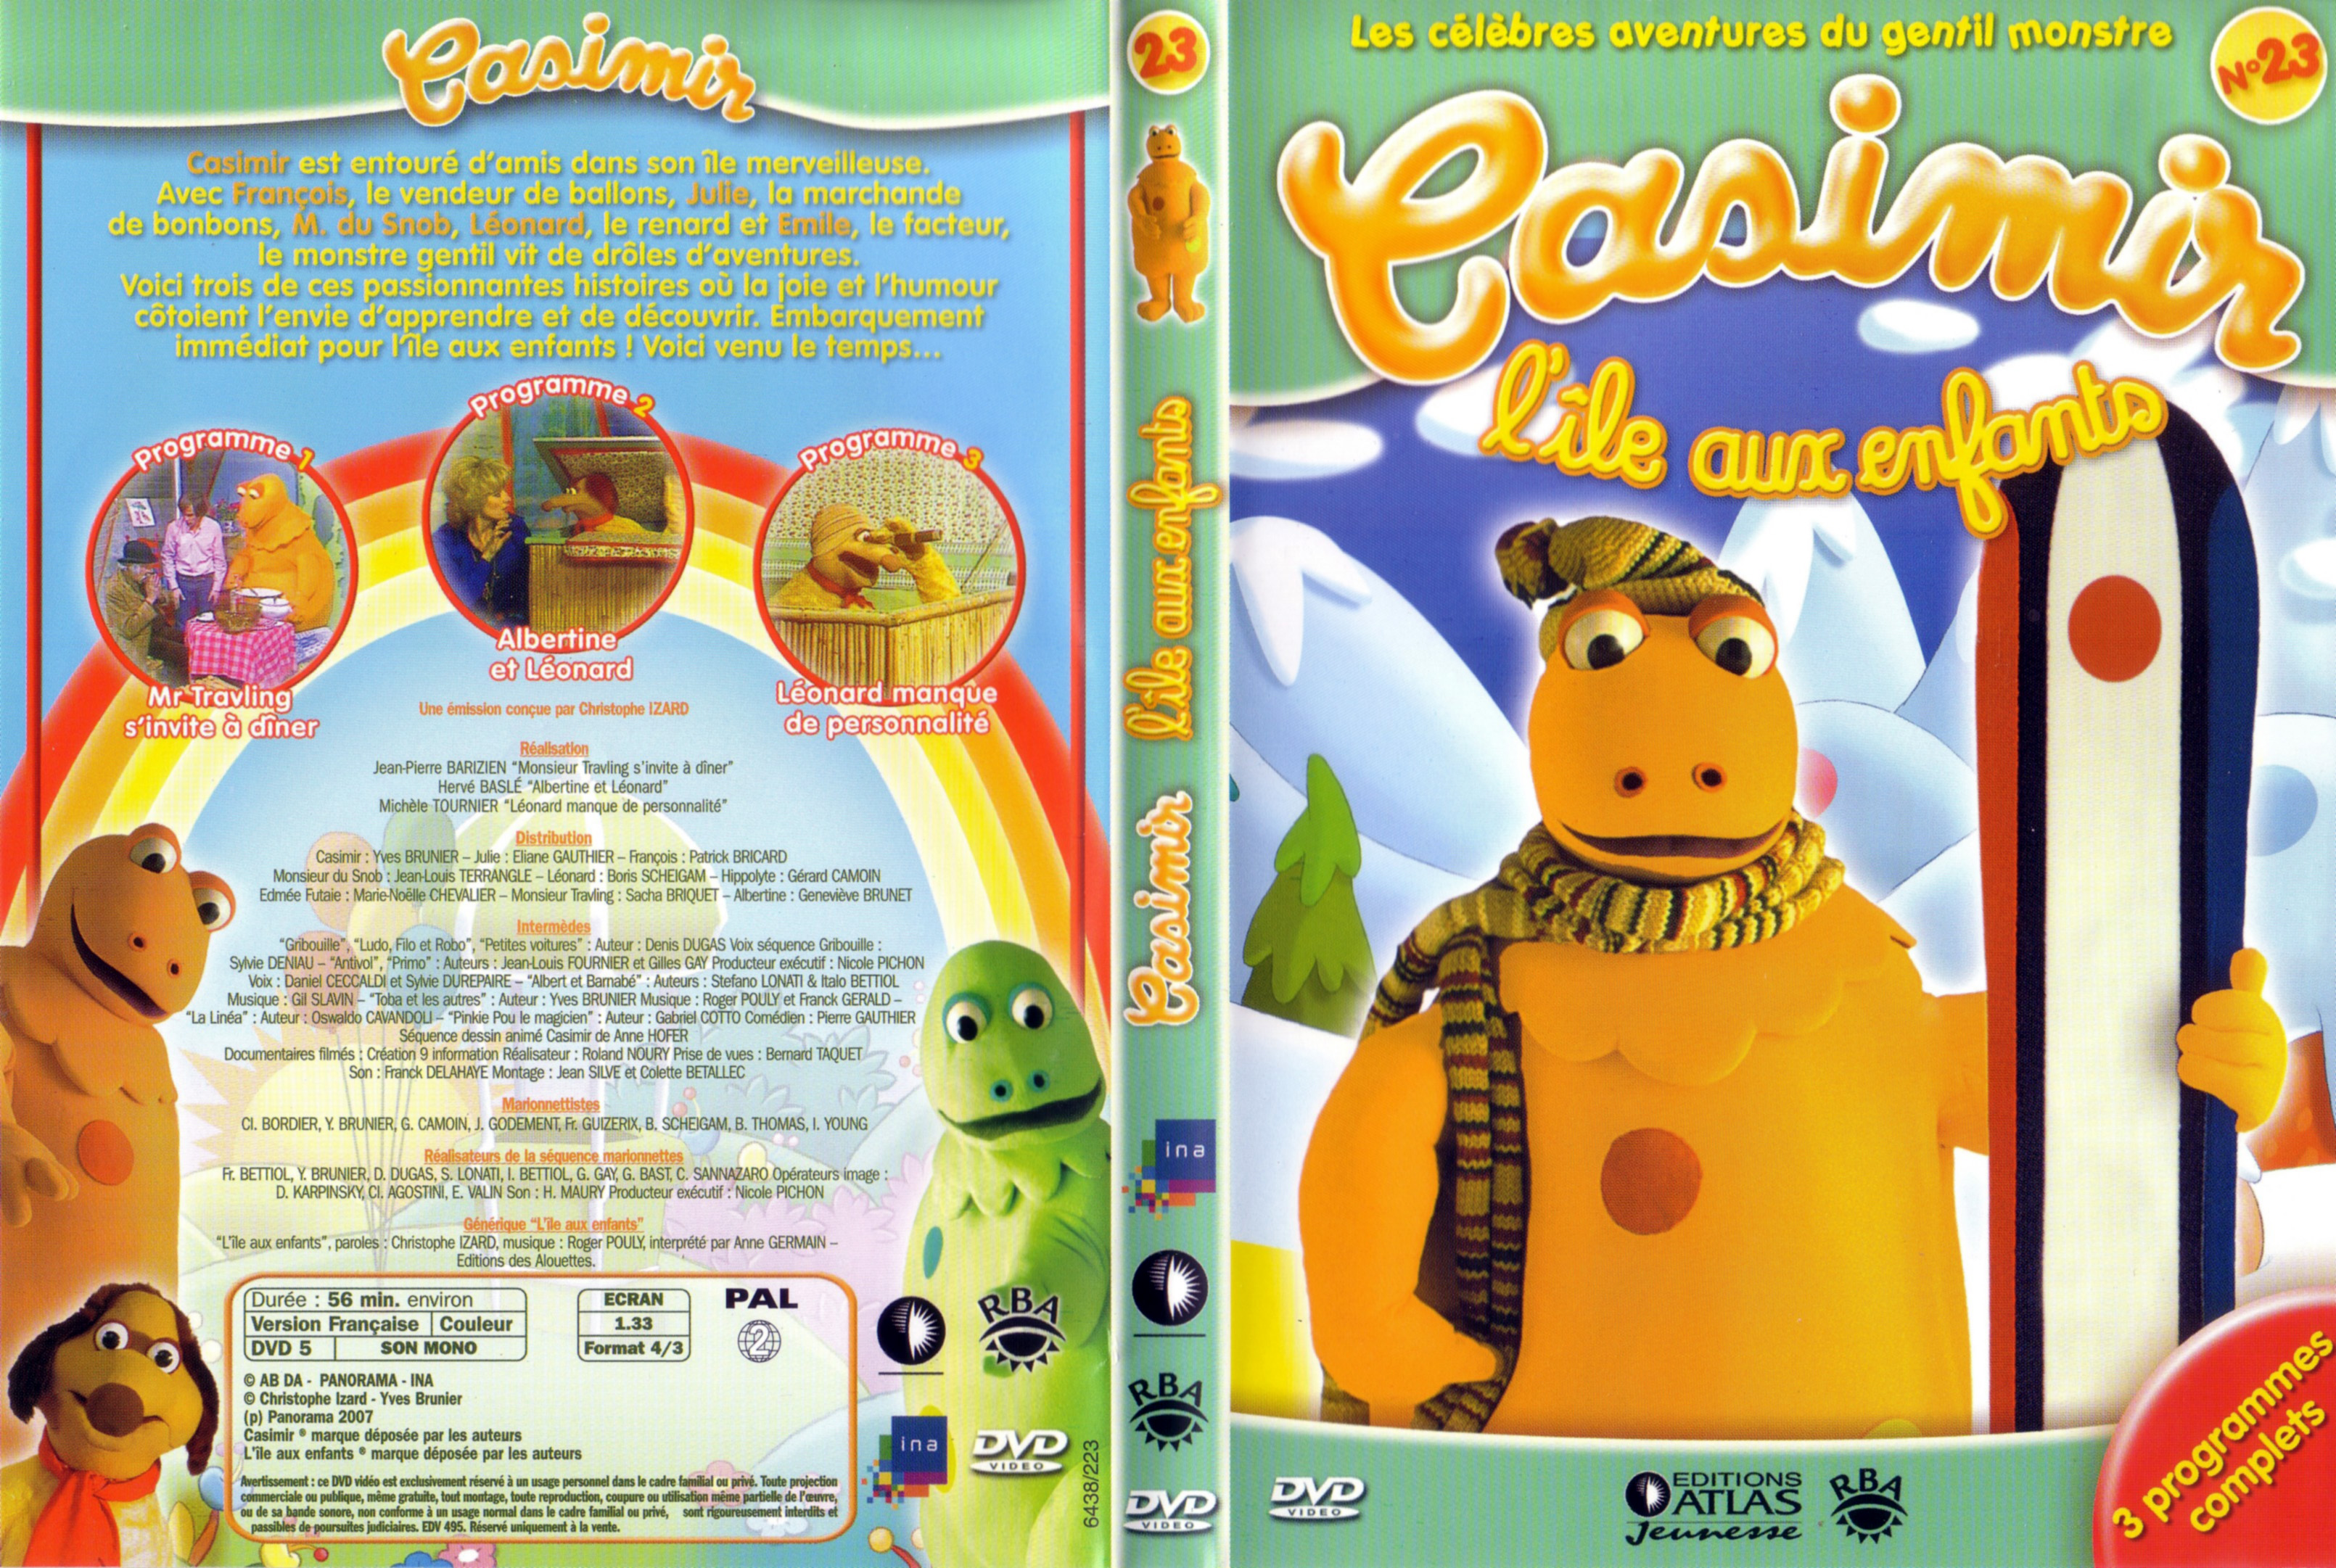 Jaquette DVD Casimir vol 23